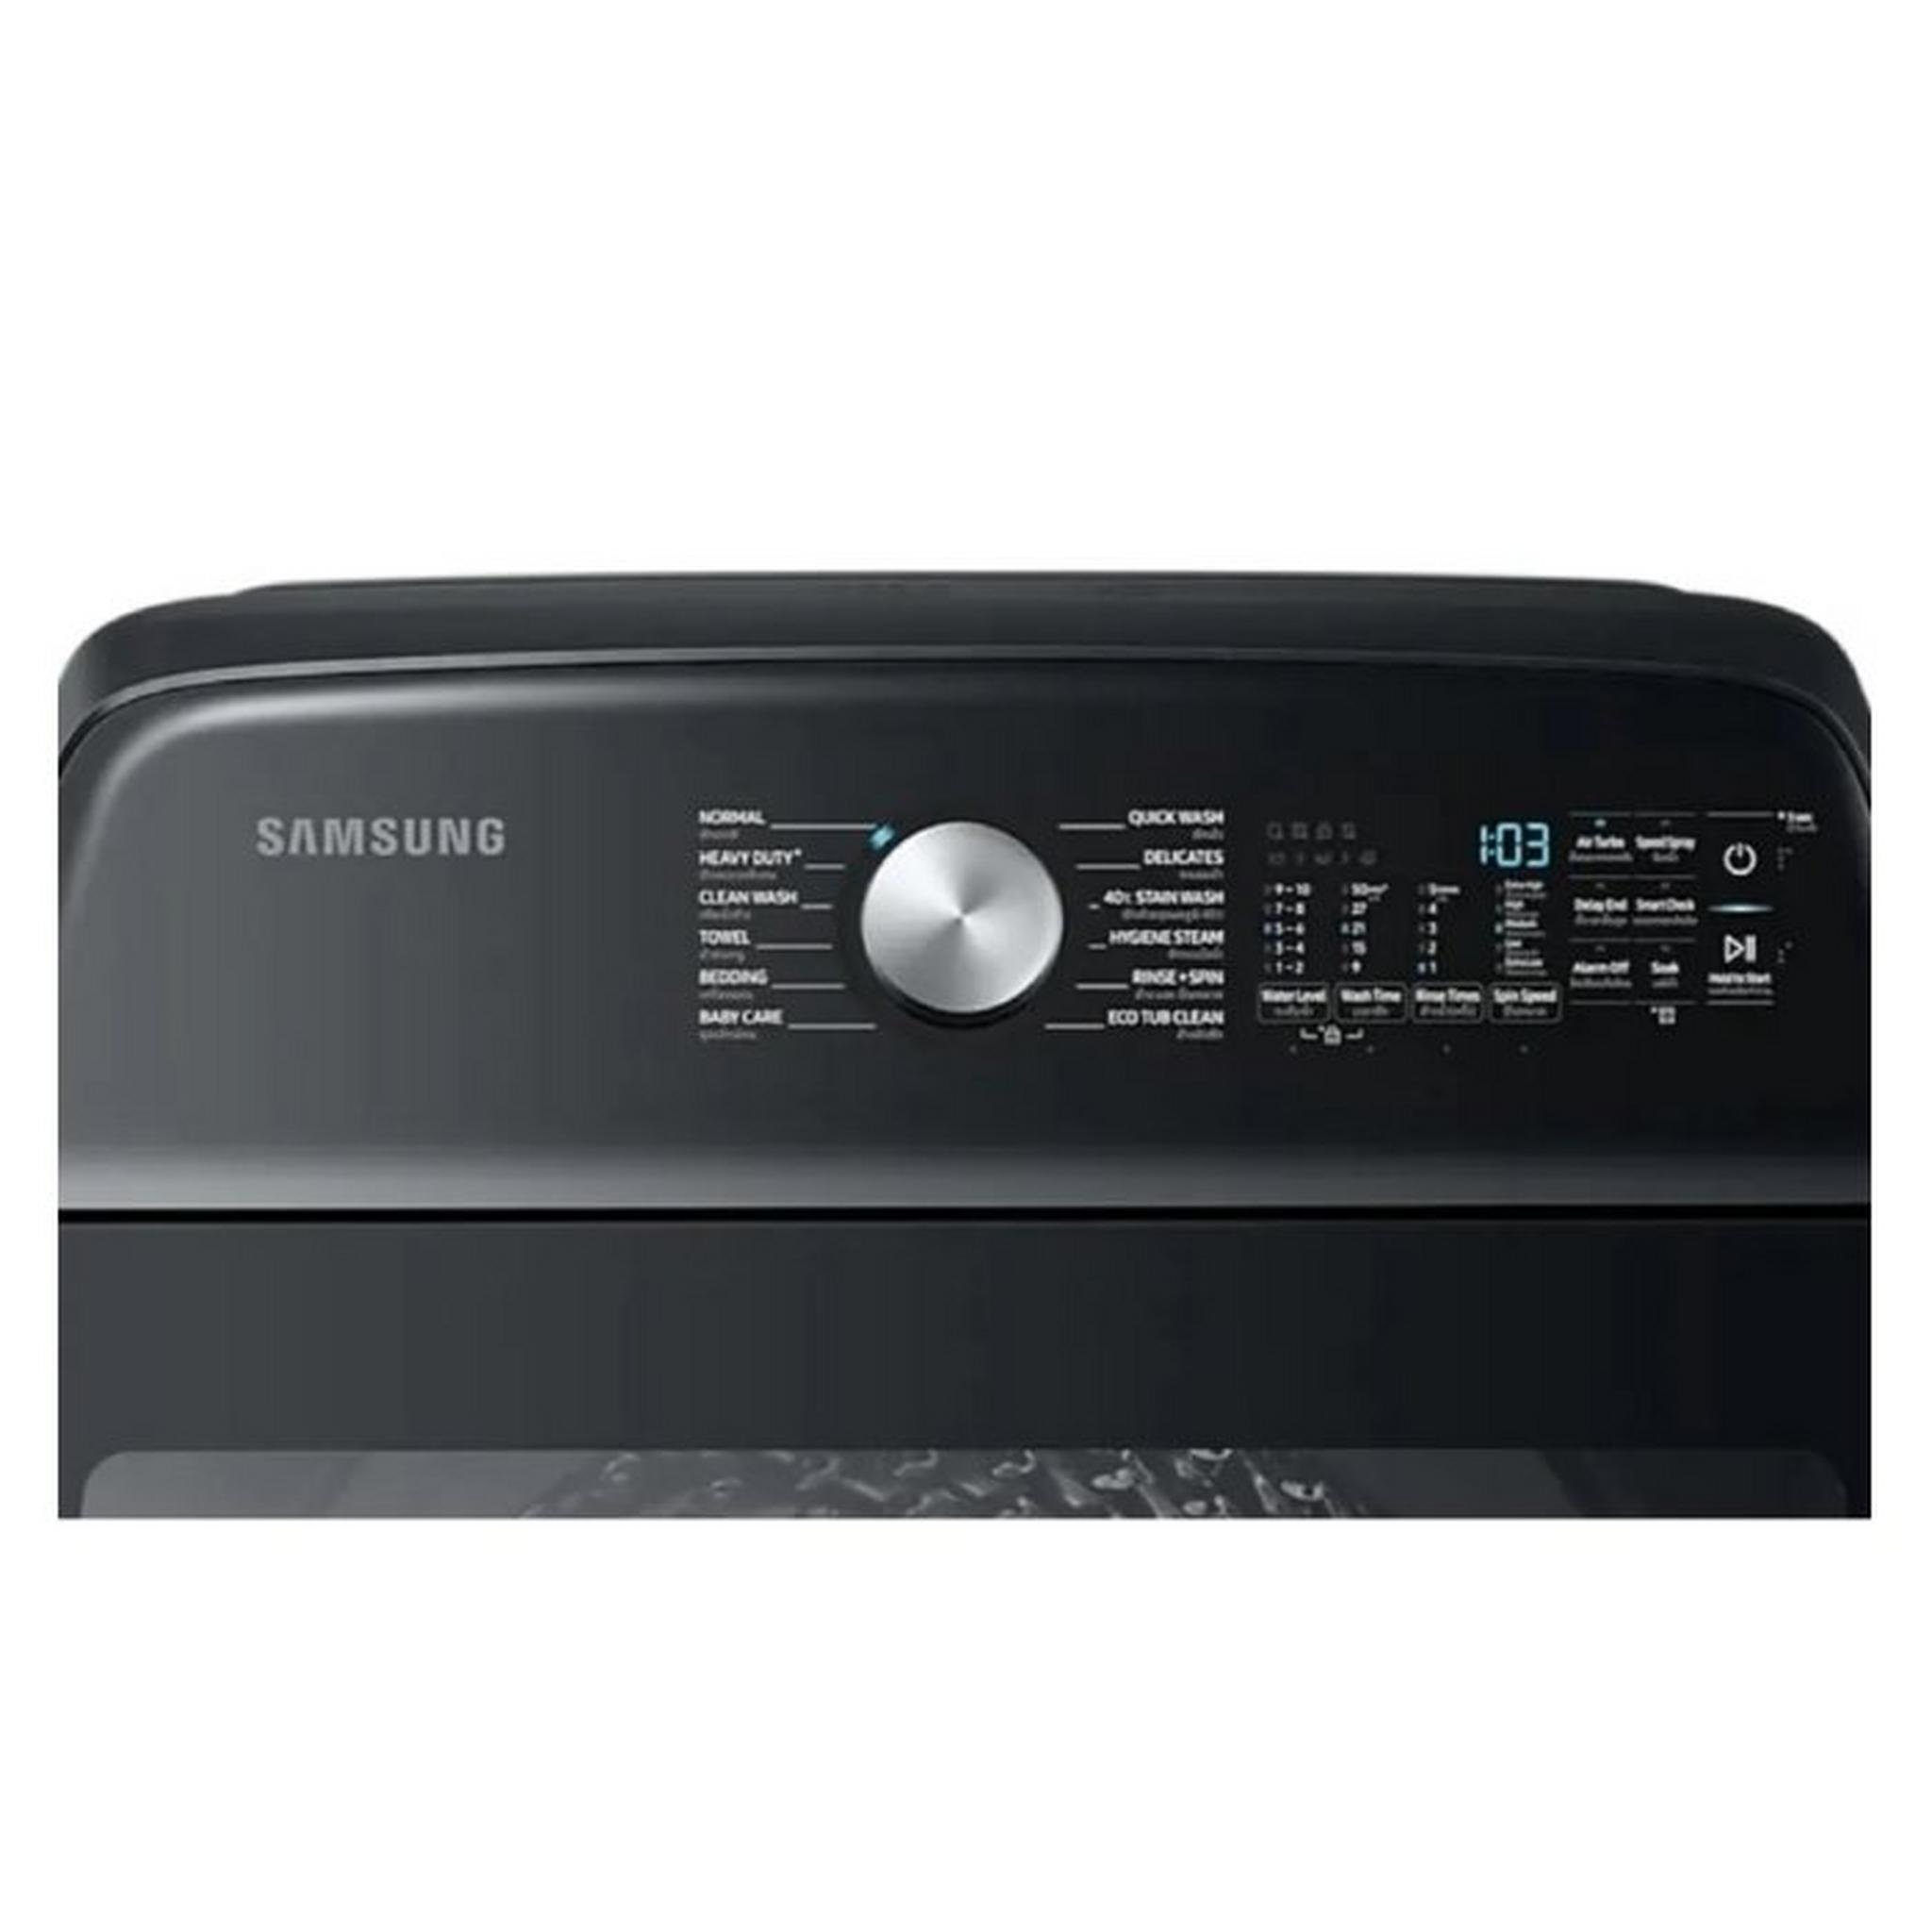 Samsung Washer Top Load 21 Kg (WA21A8376GV) Black